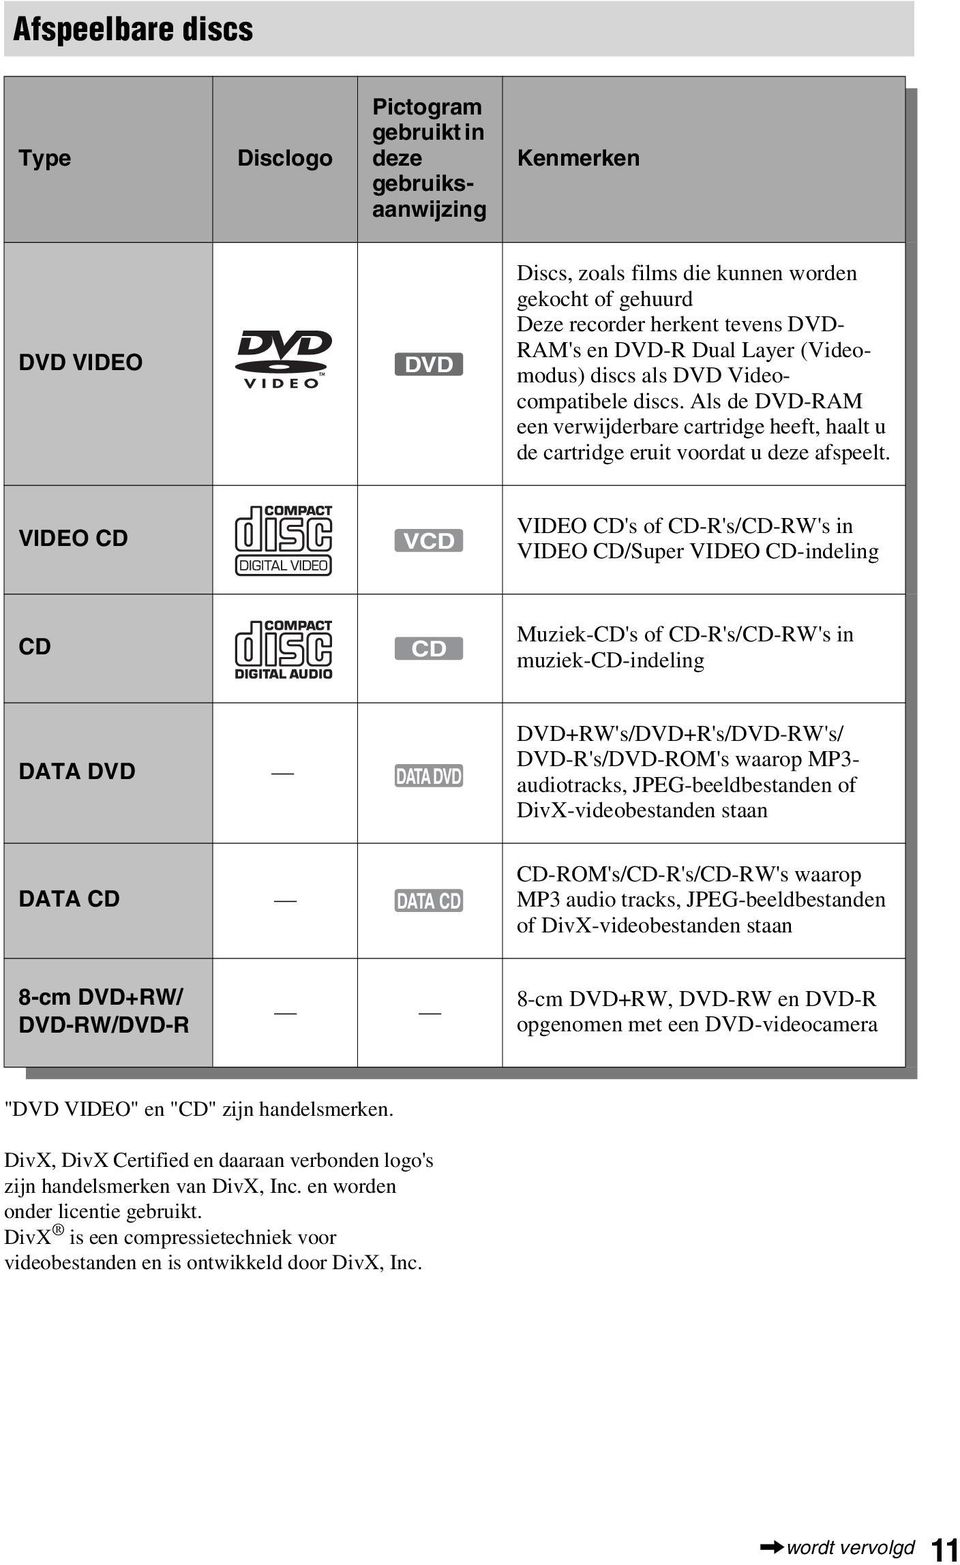 VIDEO CD VCD VIDEO CD's of CD-R's/CD-RW's in VIDEO CD/Super VIDEO CD-indeling CD CD Muziek-CD's of CD-R's/CD-RW's in muziek-cd-indeling DATA DVD DATA DVD DVD+RW's/DVD+R's/DVD-RW's/ DVD-R's/DVD-ROM's